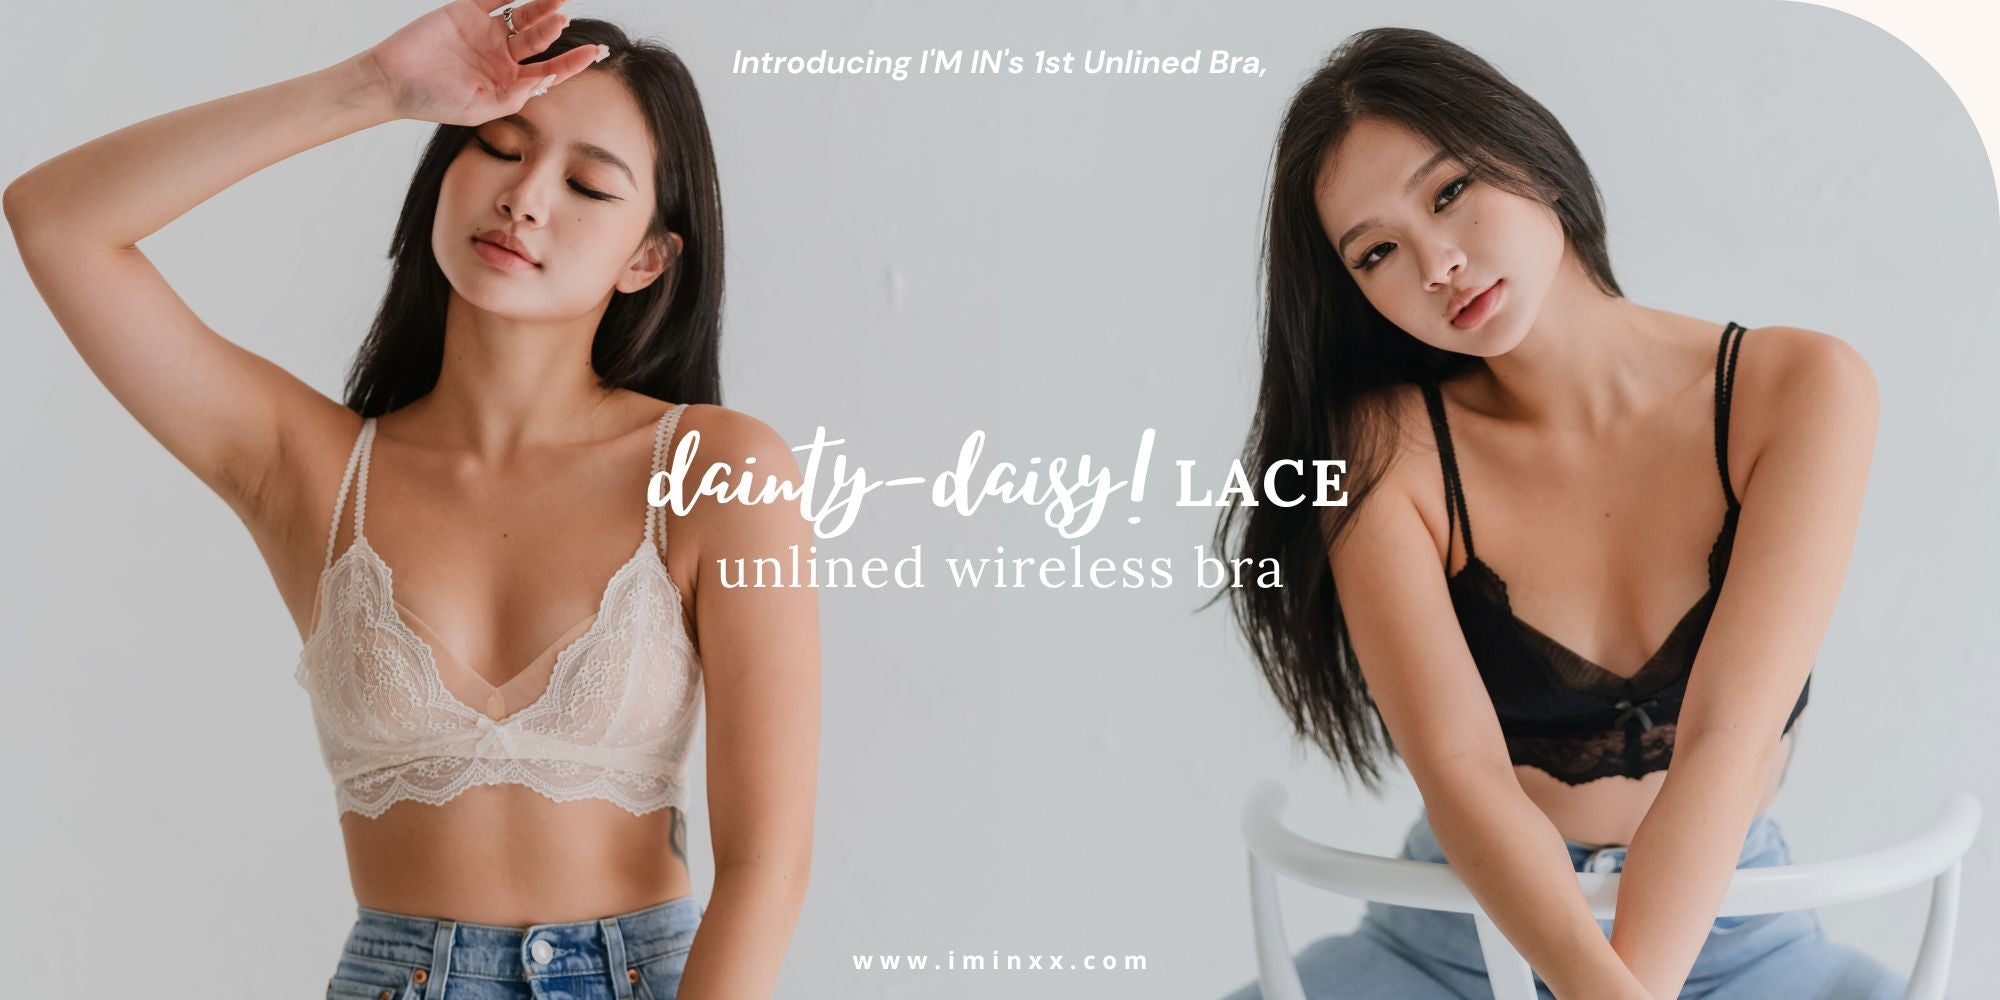 Dainty Daisy! Lace Unlined Wireless Bra Tagged 38D/85D